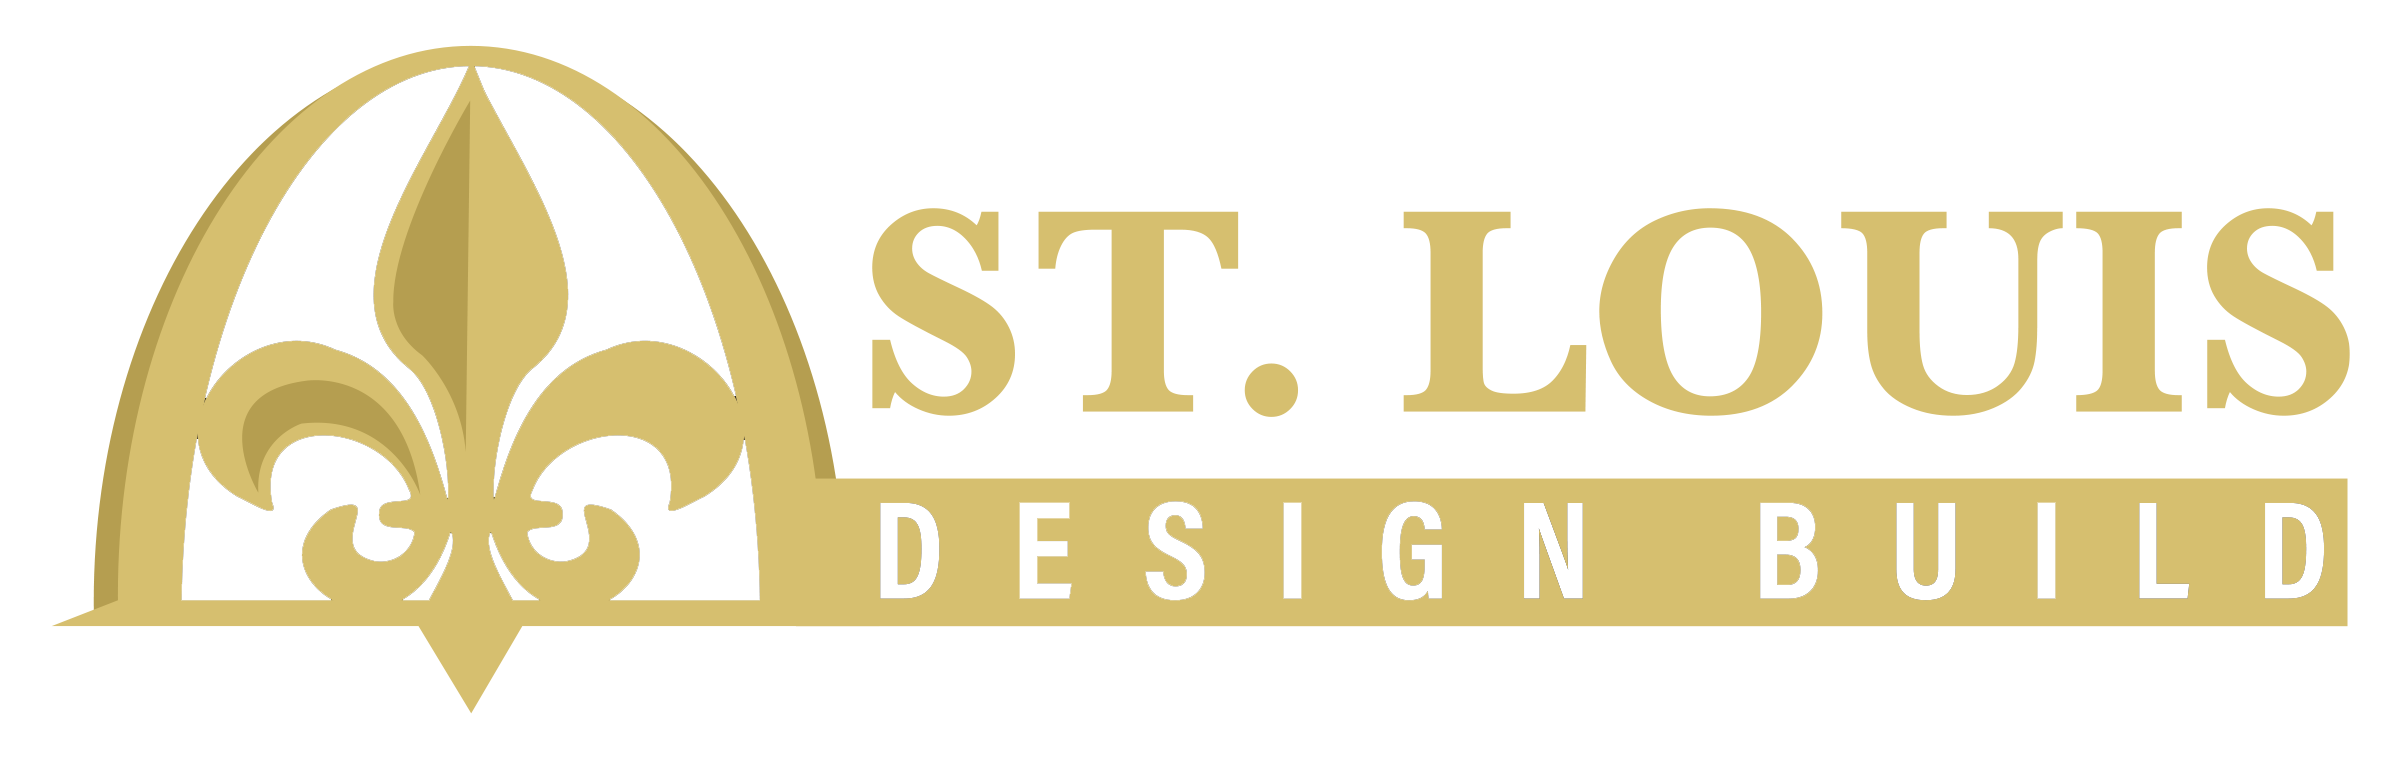 St Louis Design Build header logo